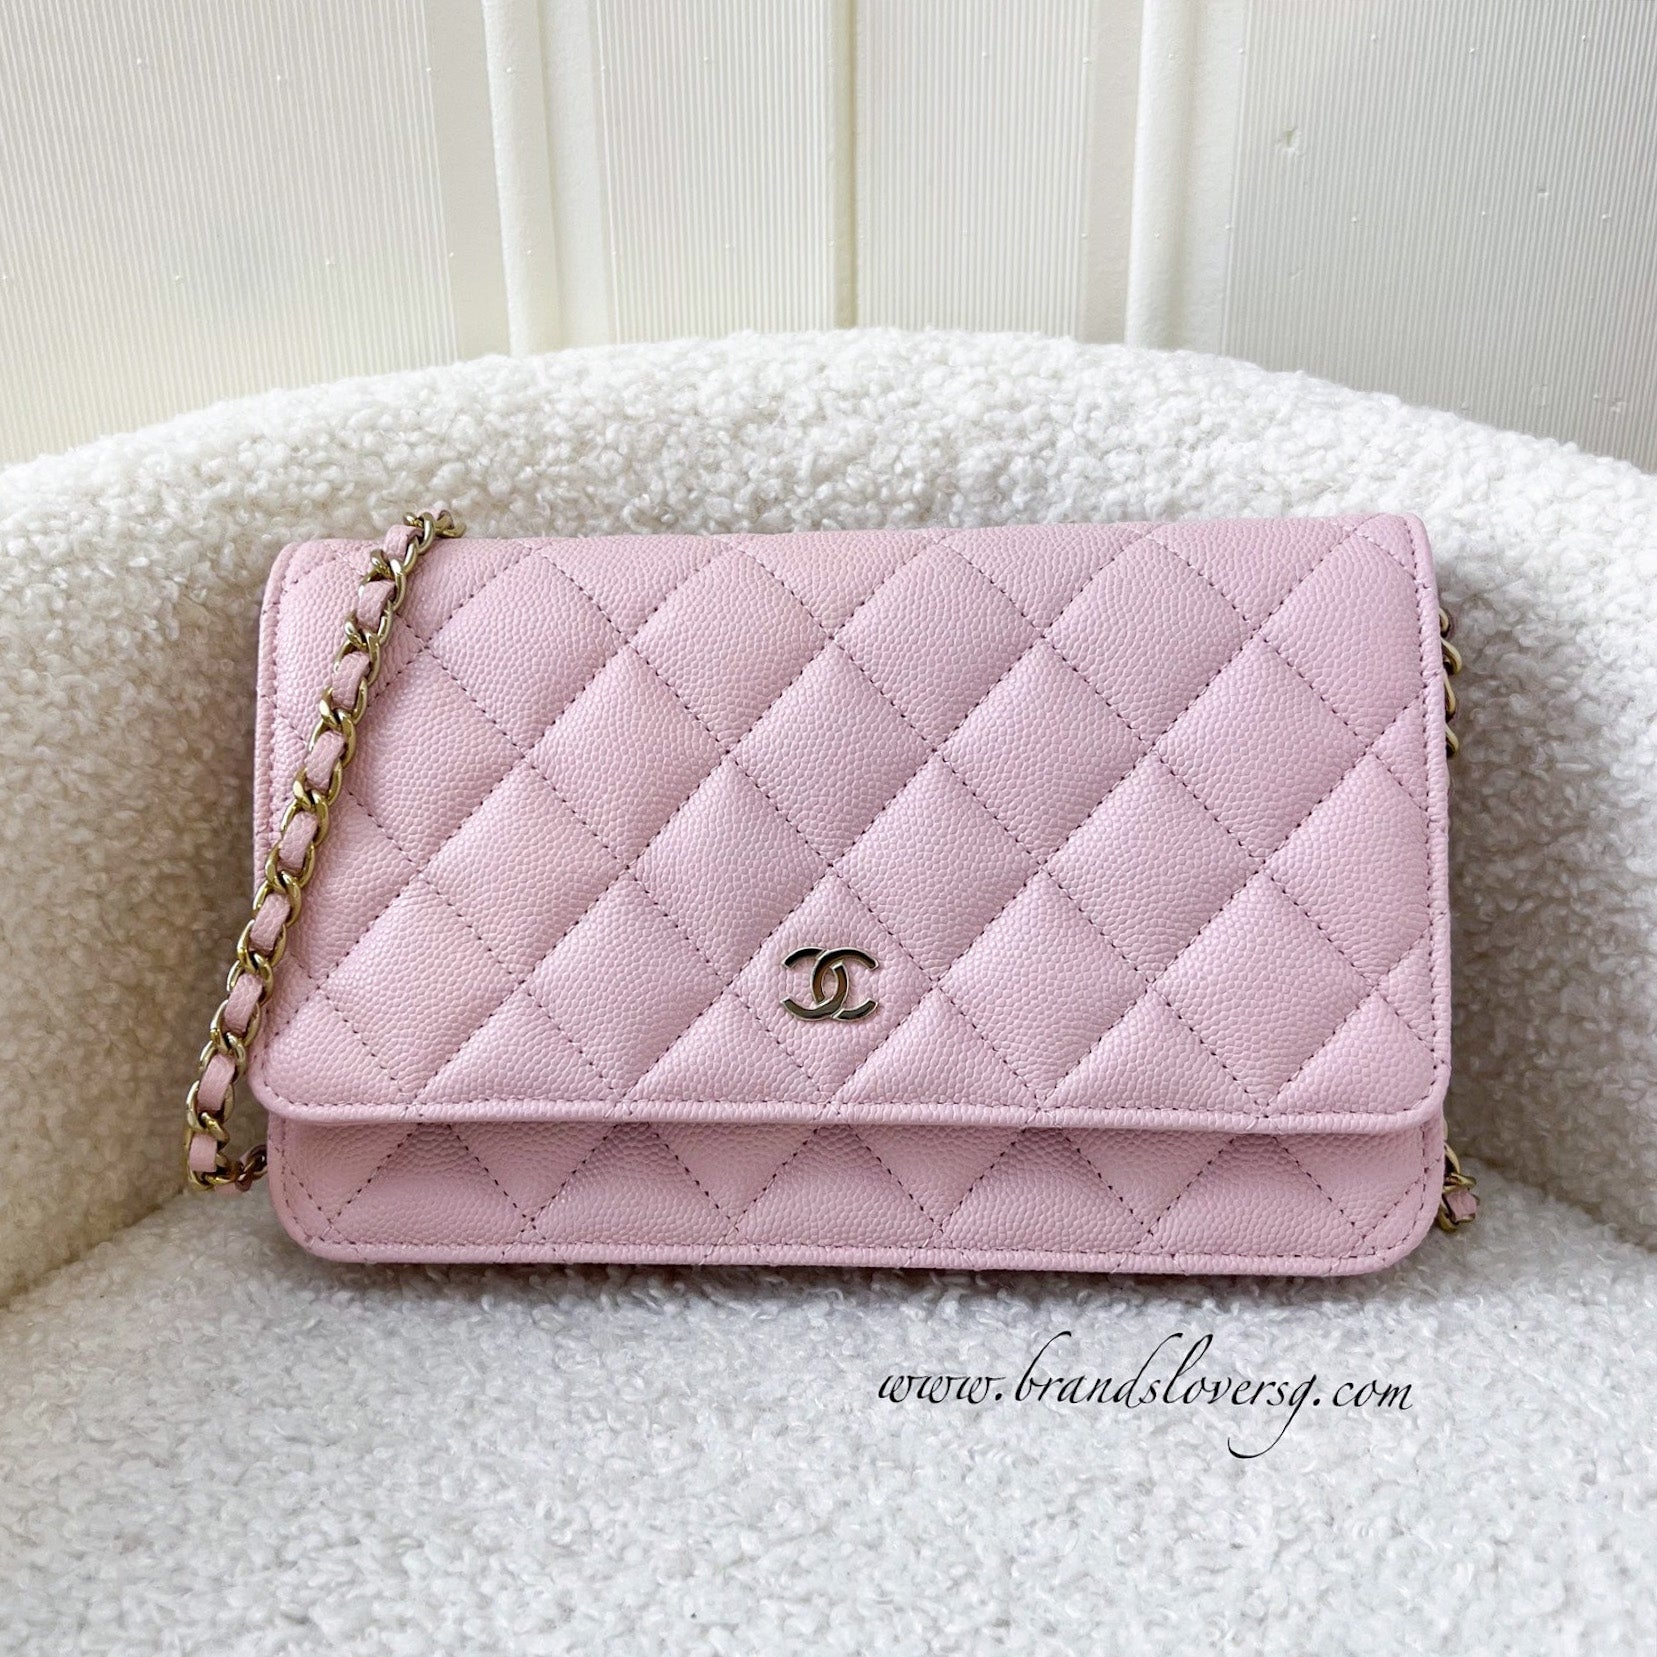 22p chanel pink bag